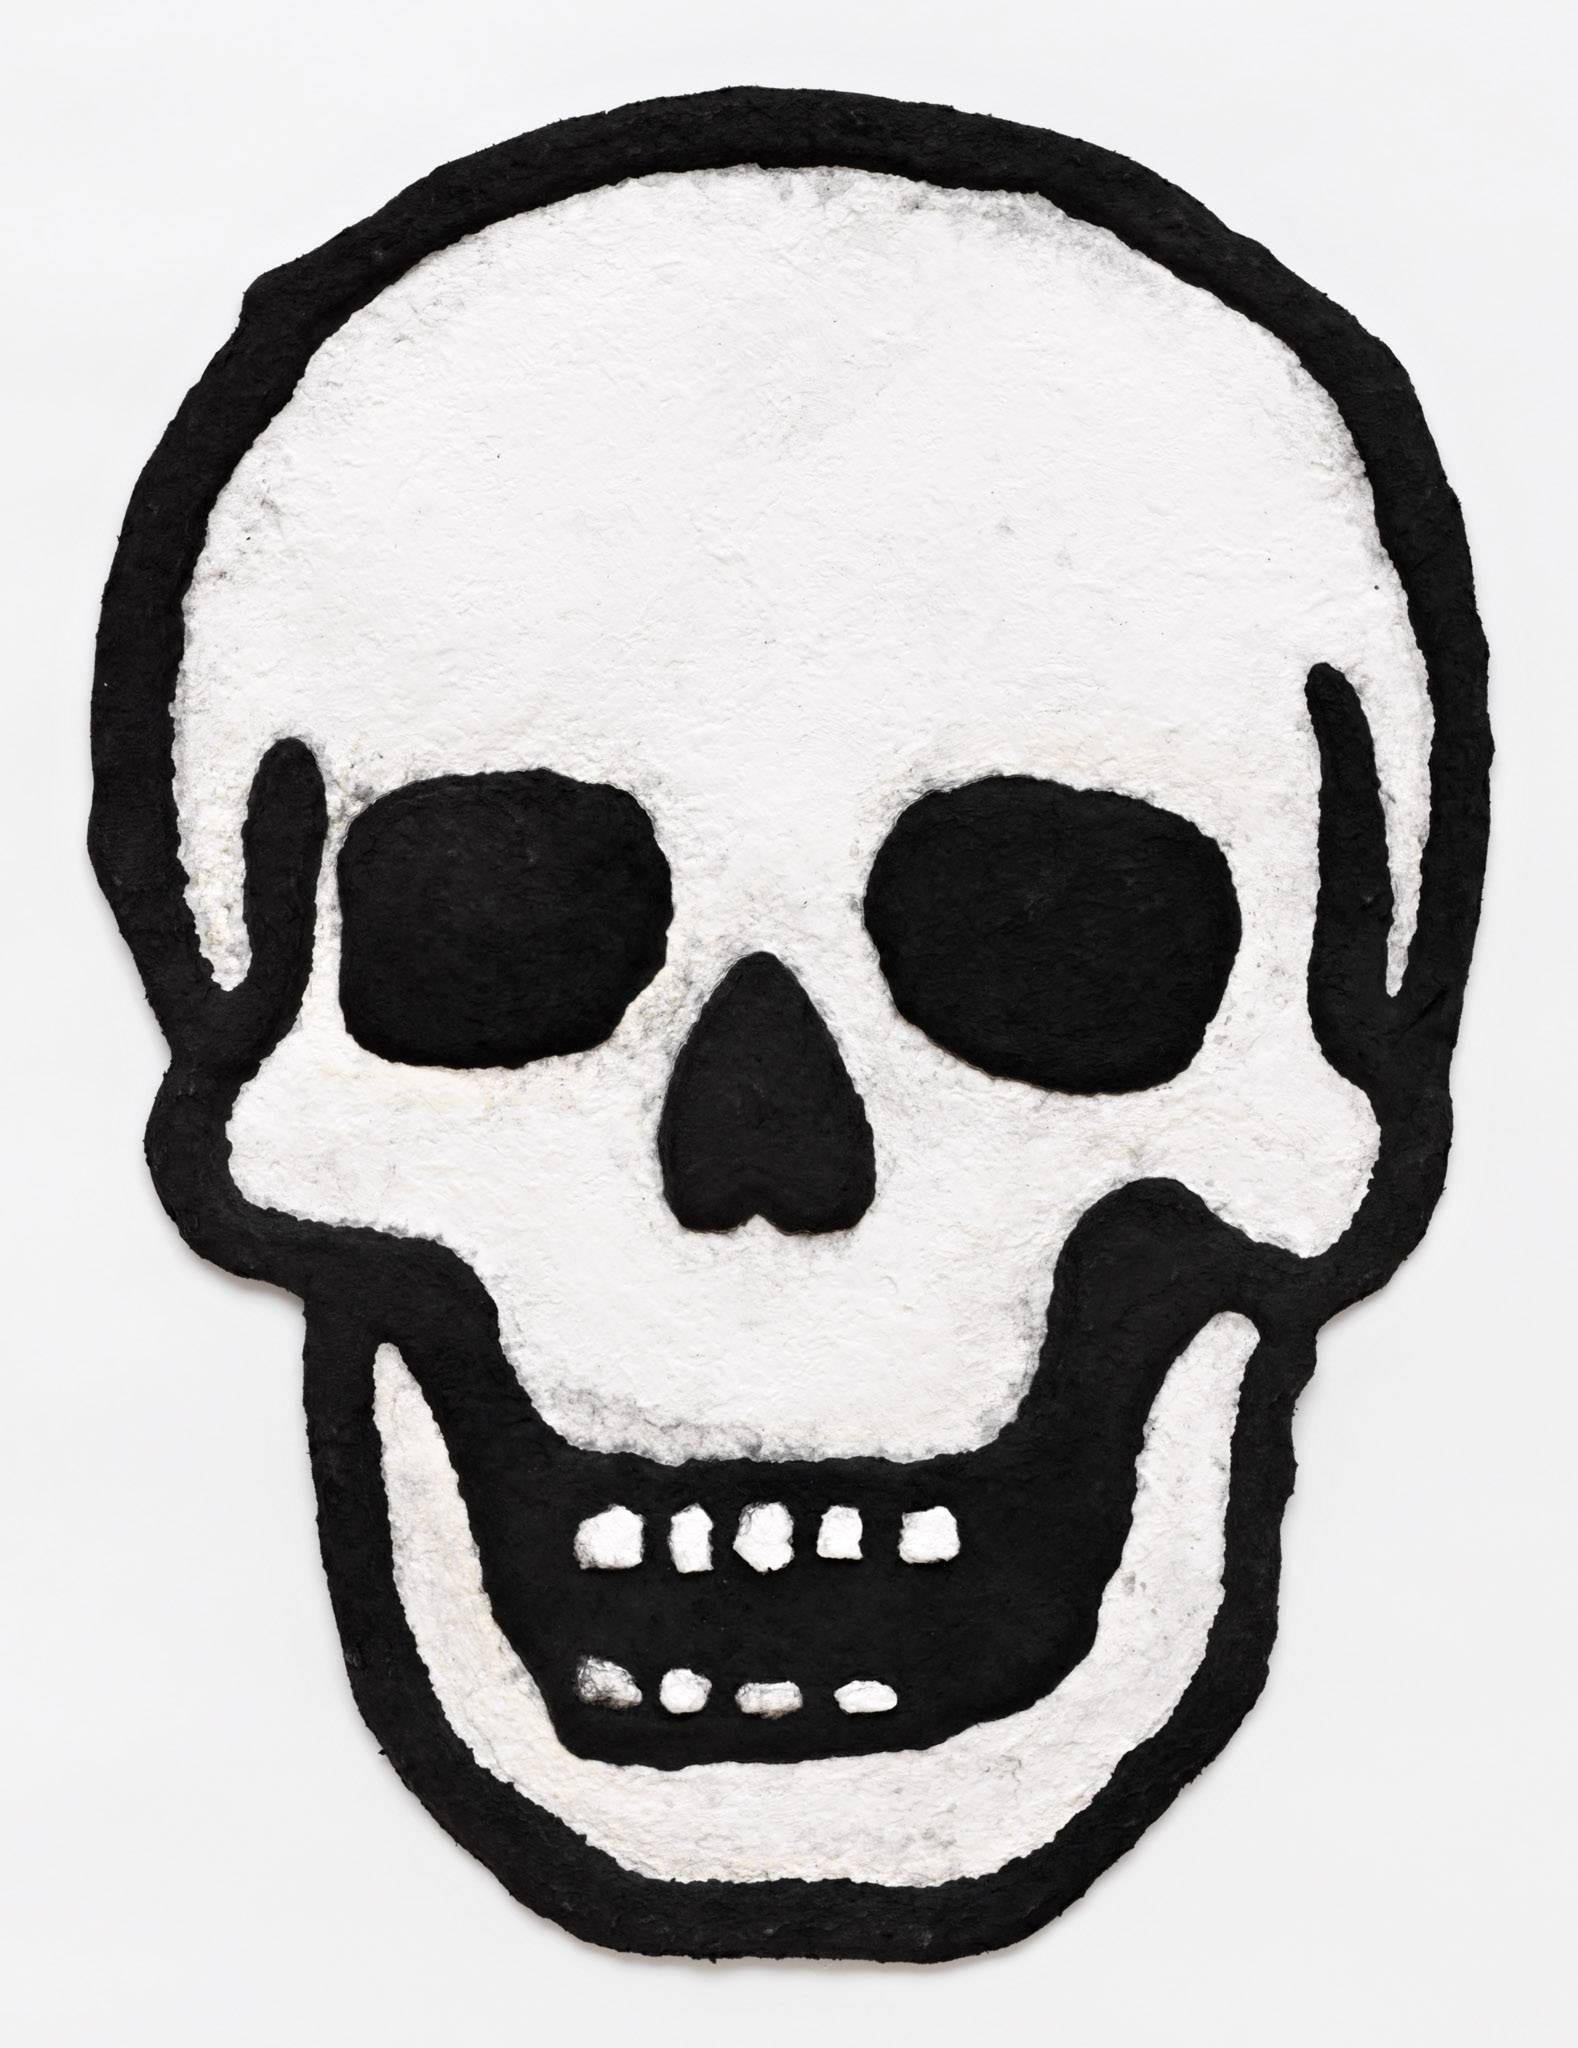 Untitled (Skull) - Print by Donald Baechler